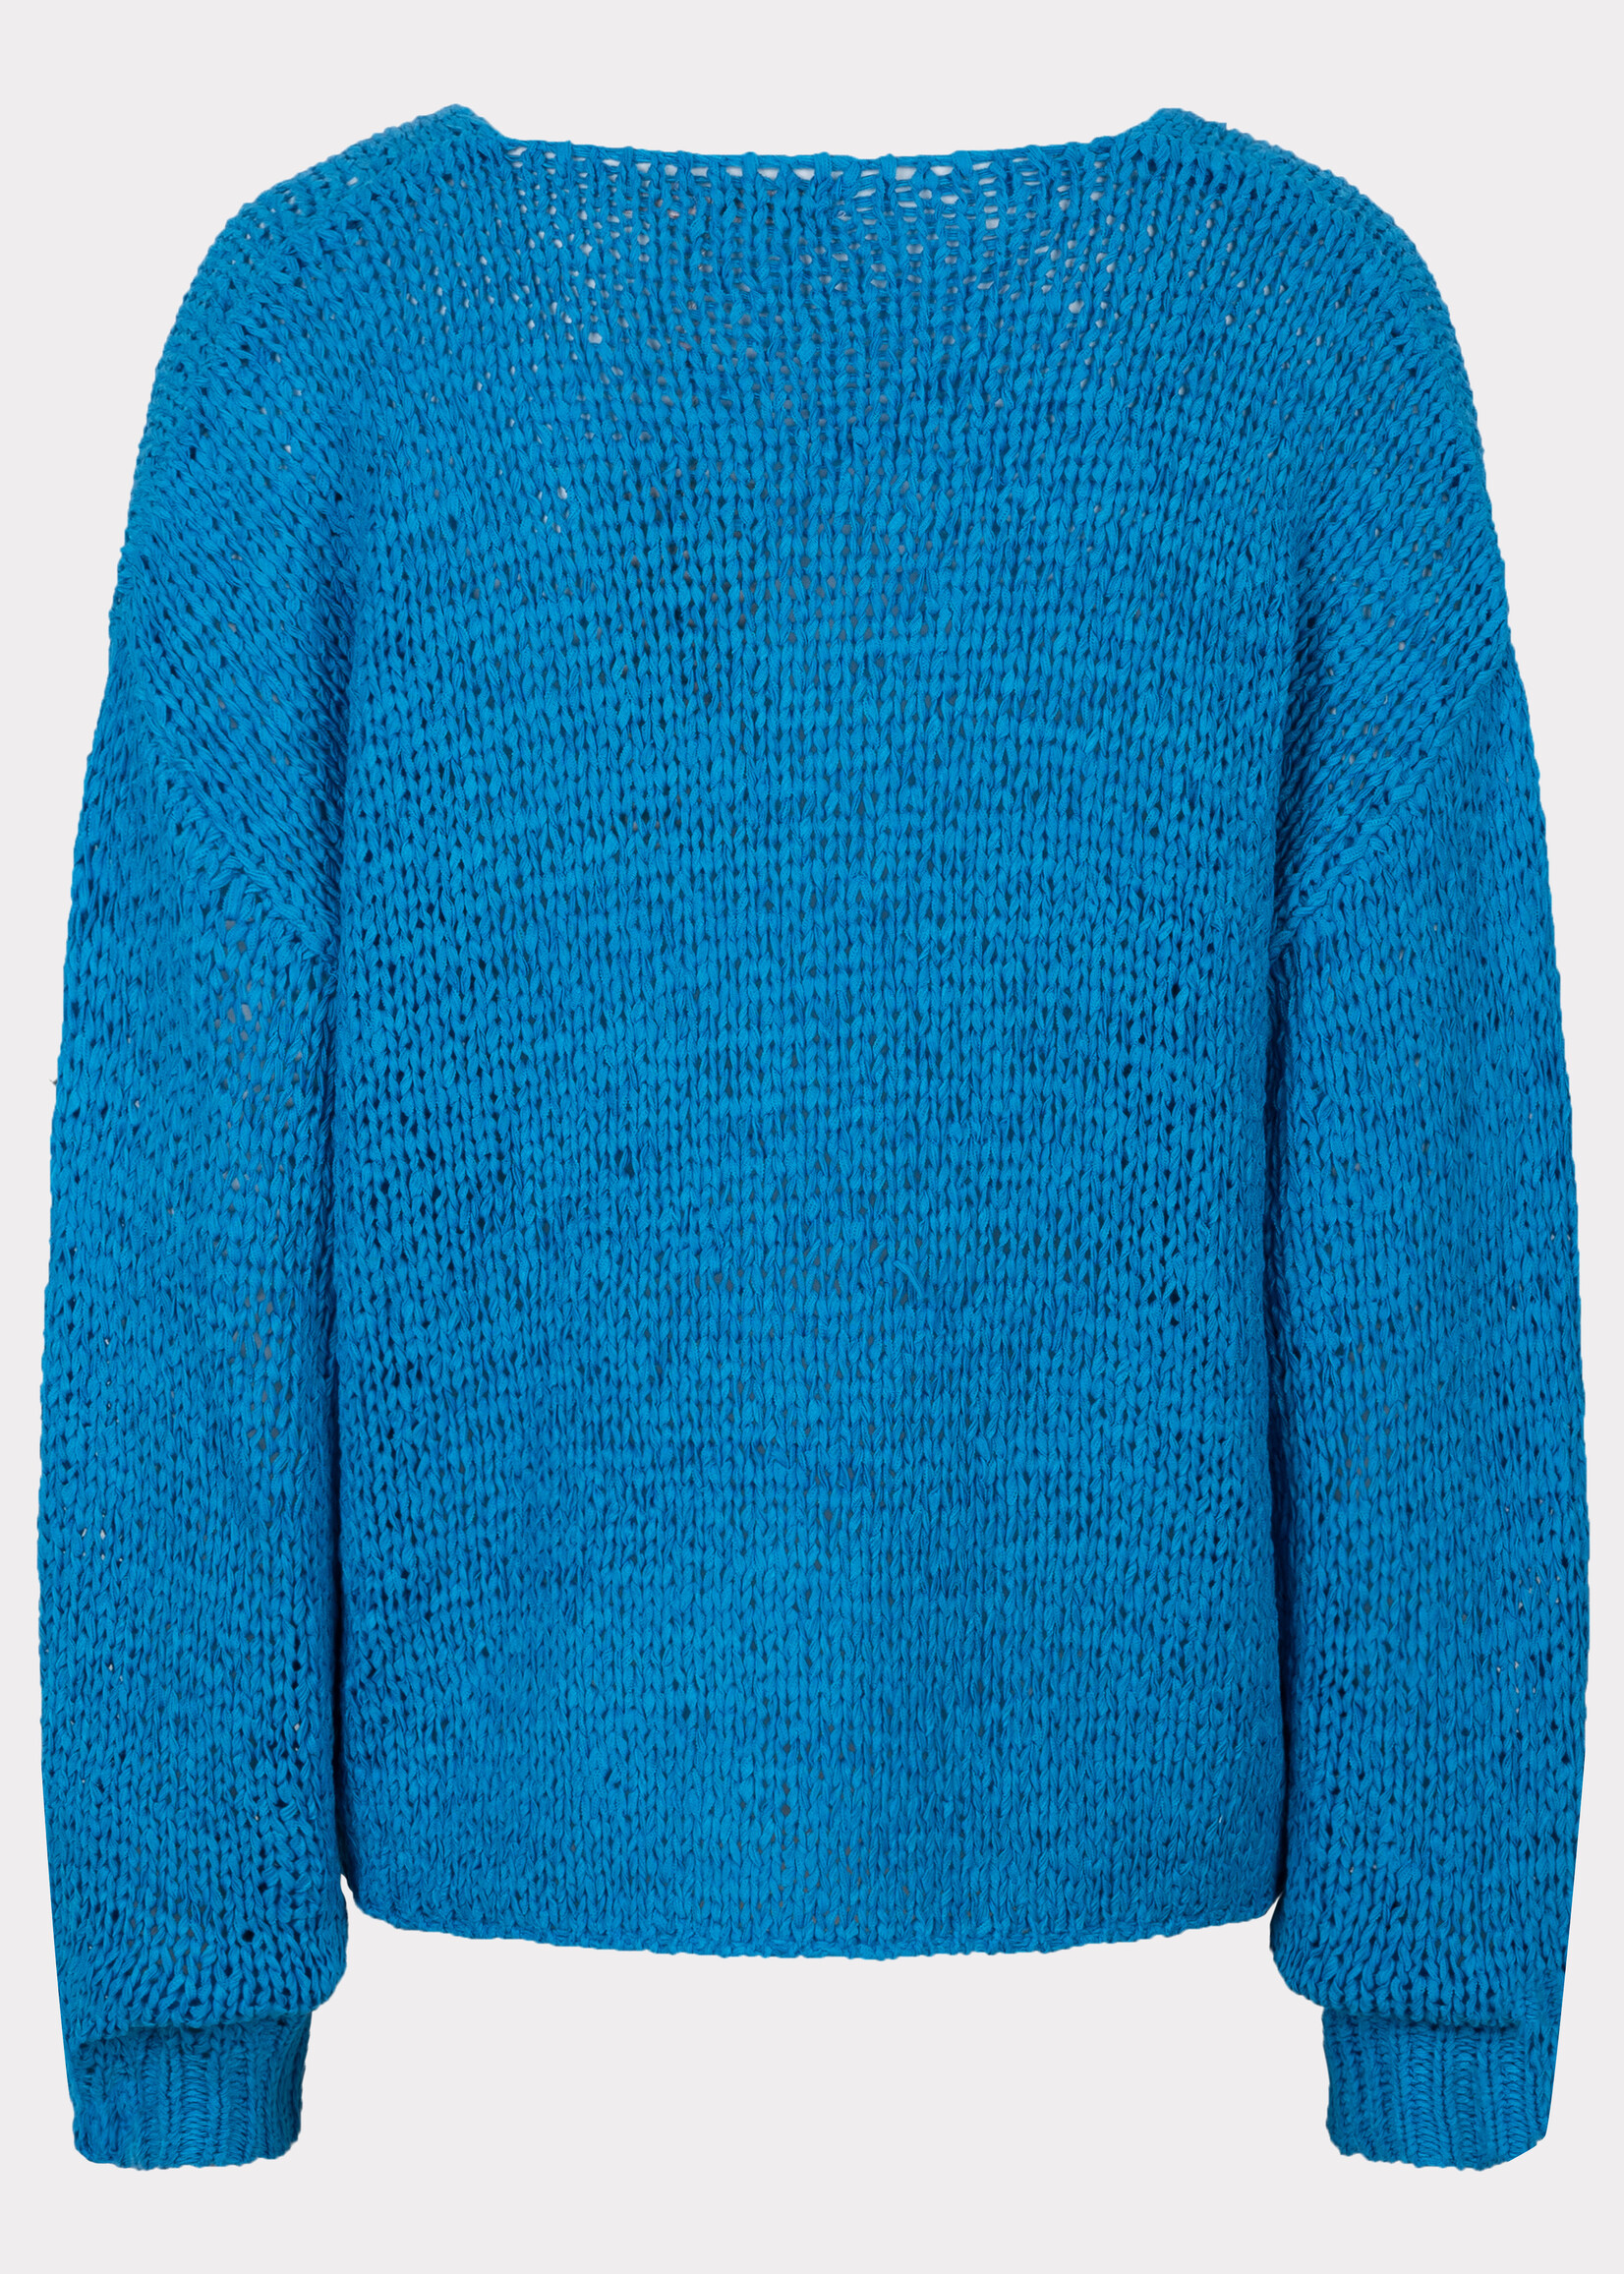 EsQualo Sweater v/neck tape yarn blue 18010